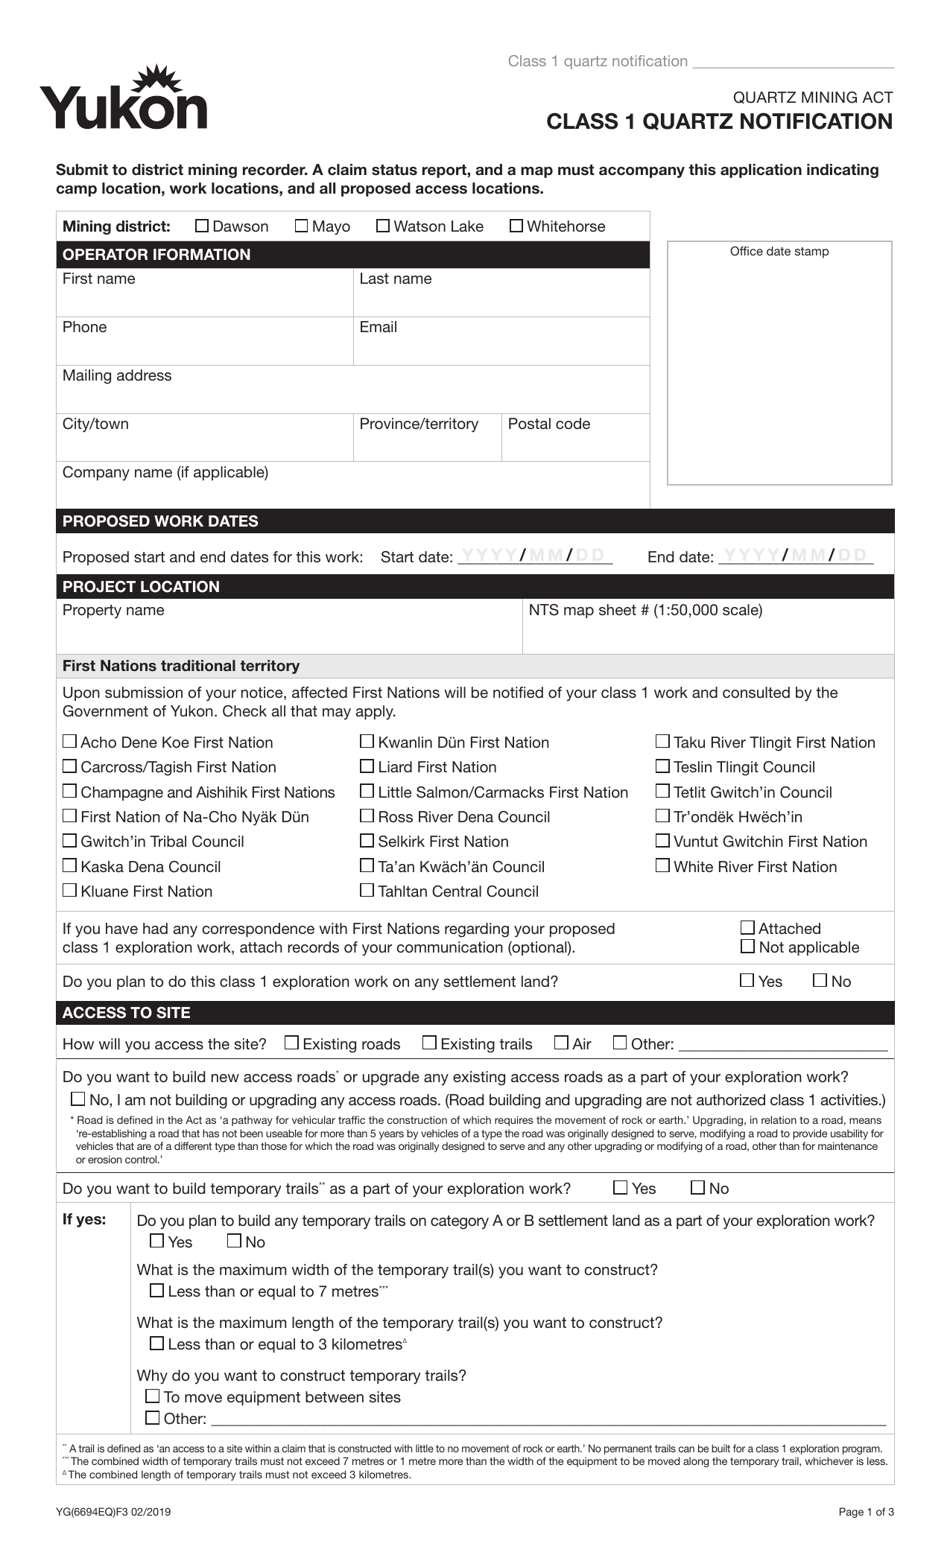 Form YG6694 Class 1 Quartz Notification - Yukon, Canada, Page 1